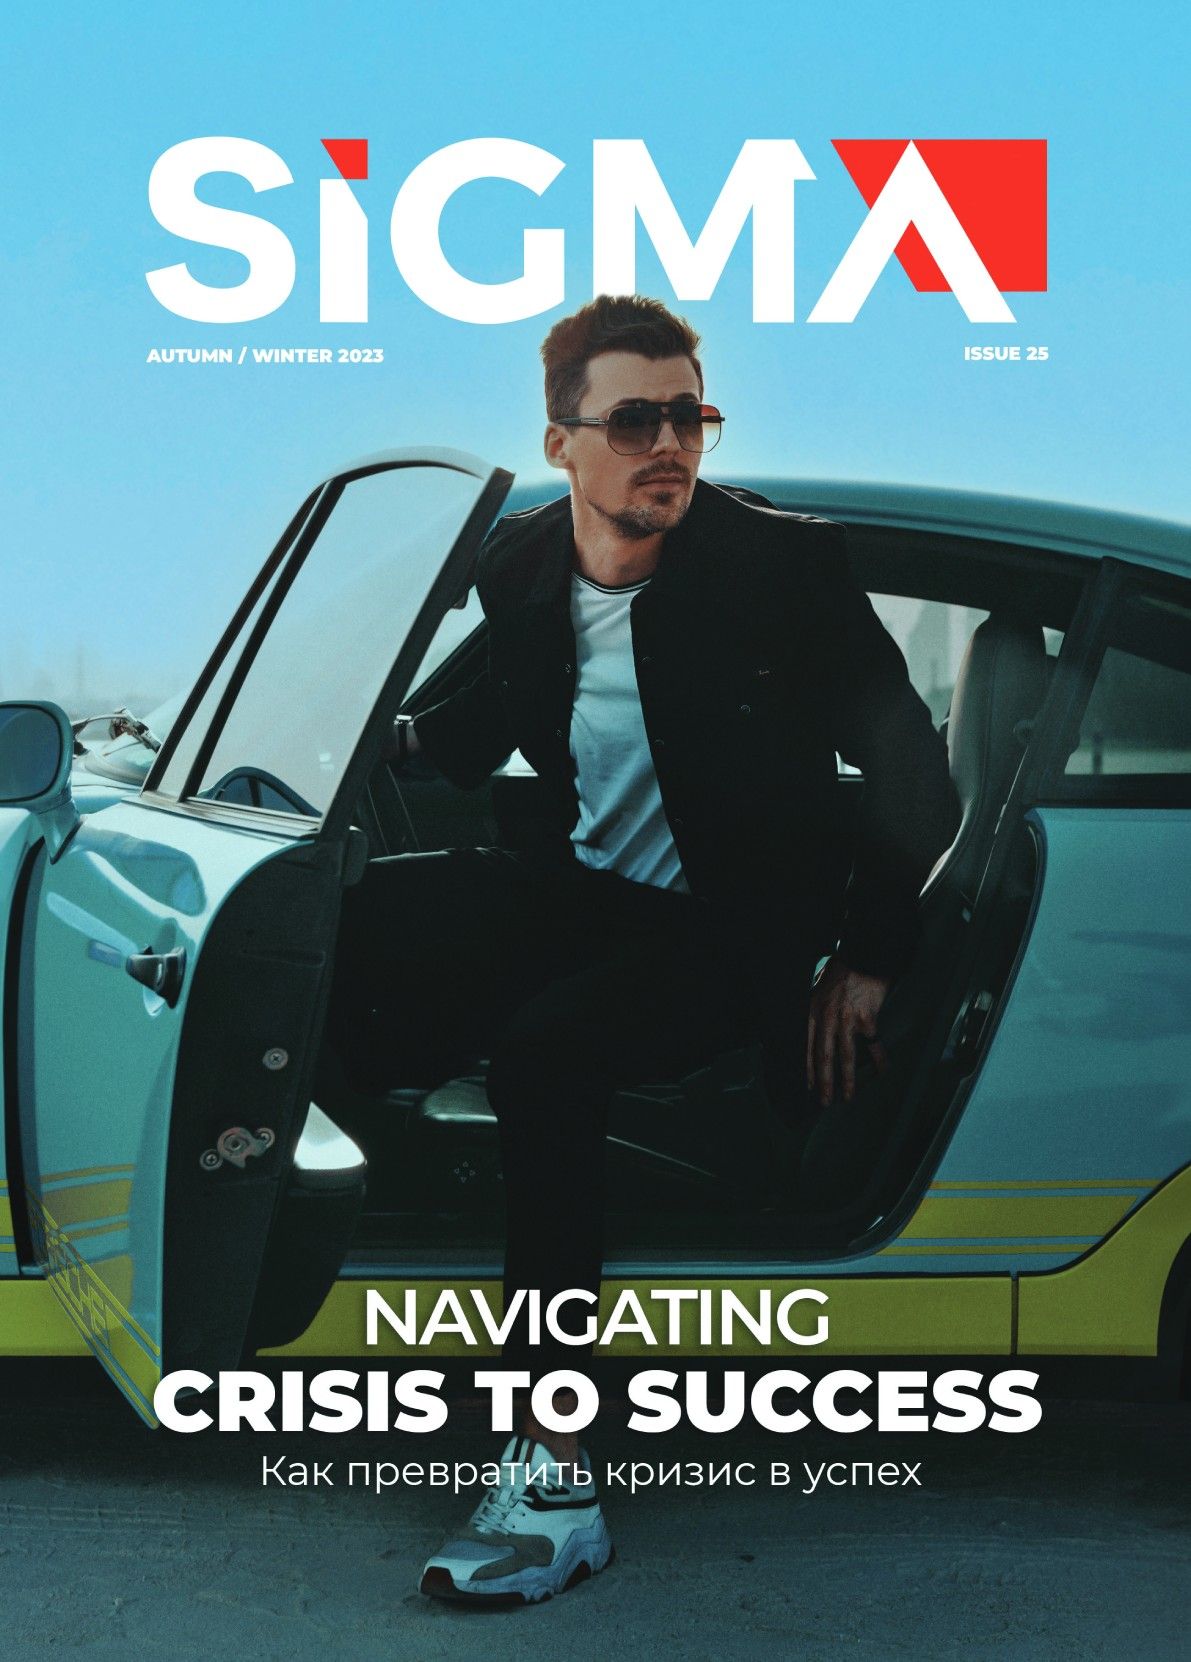 sigma magazine cover issue 25